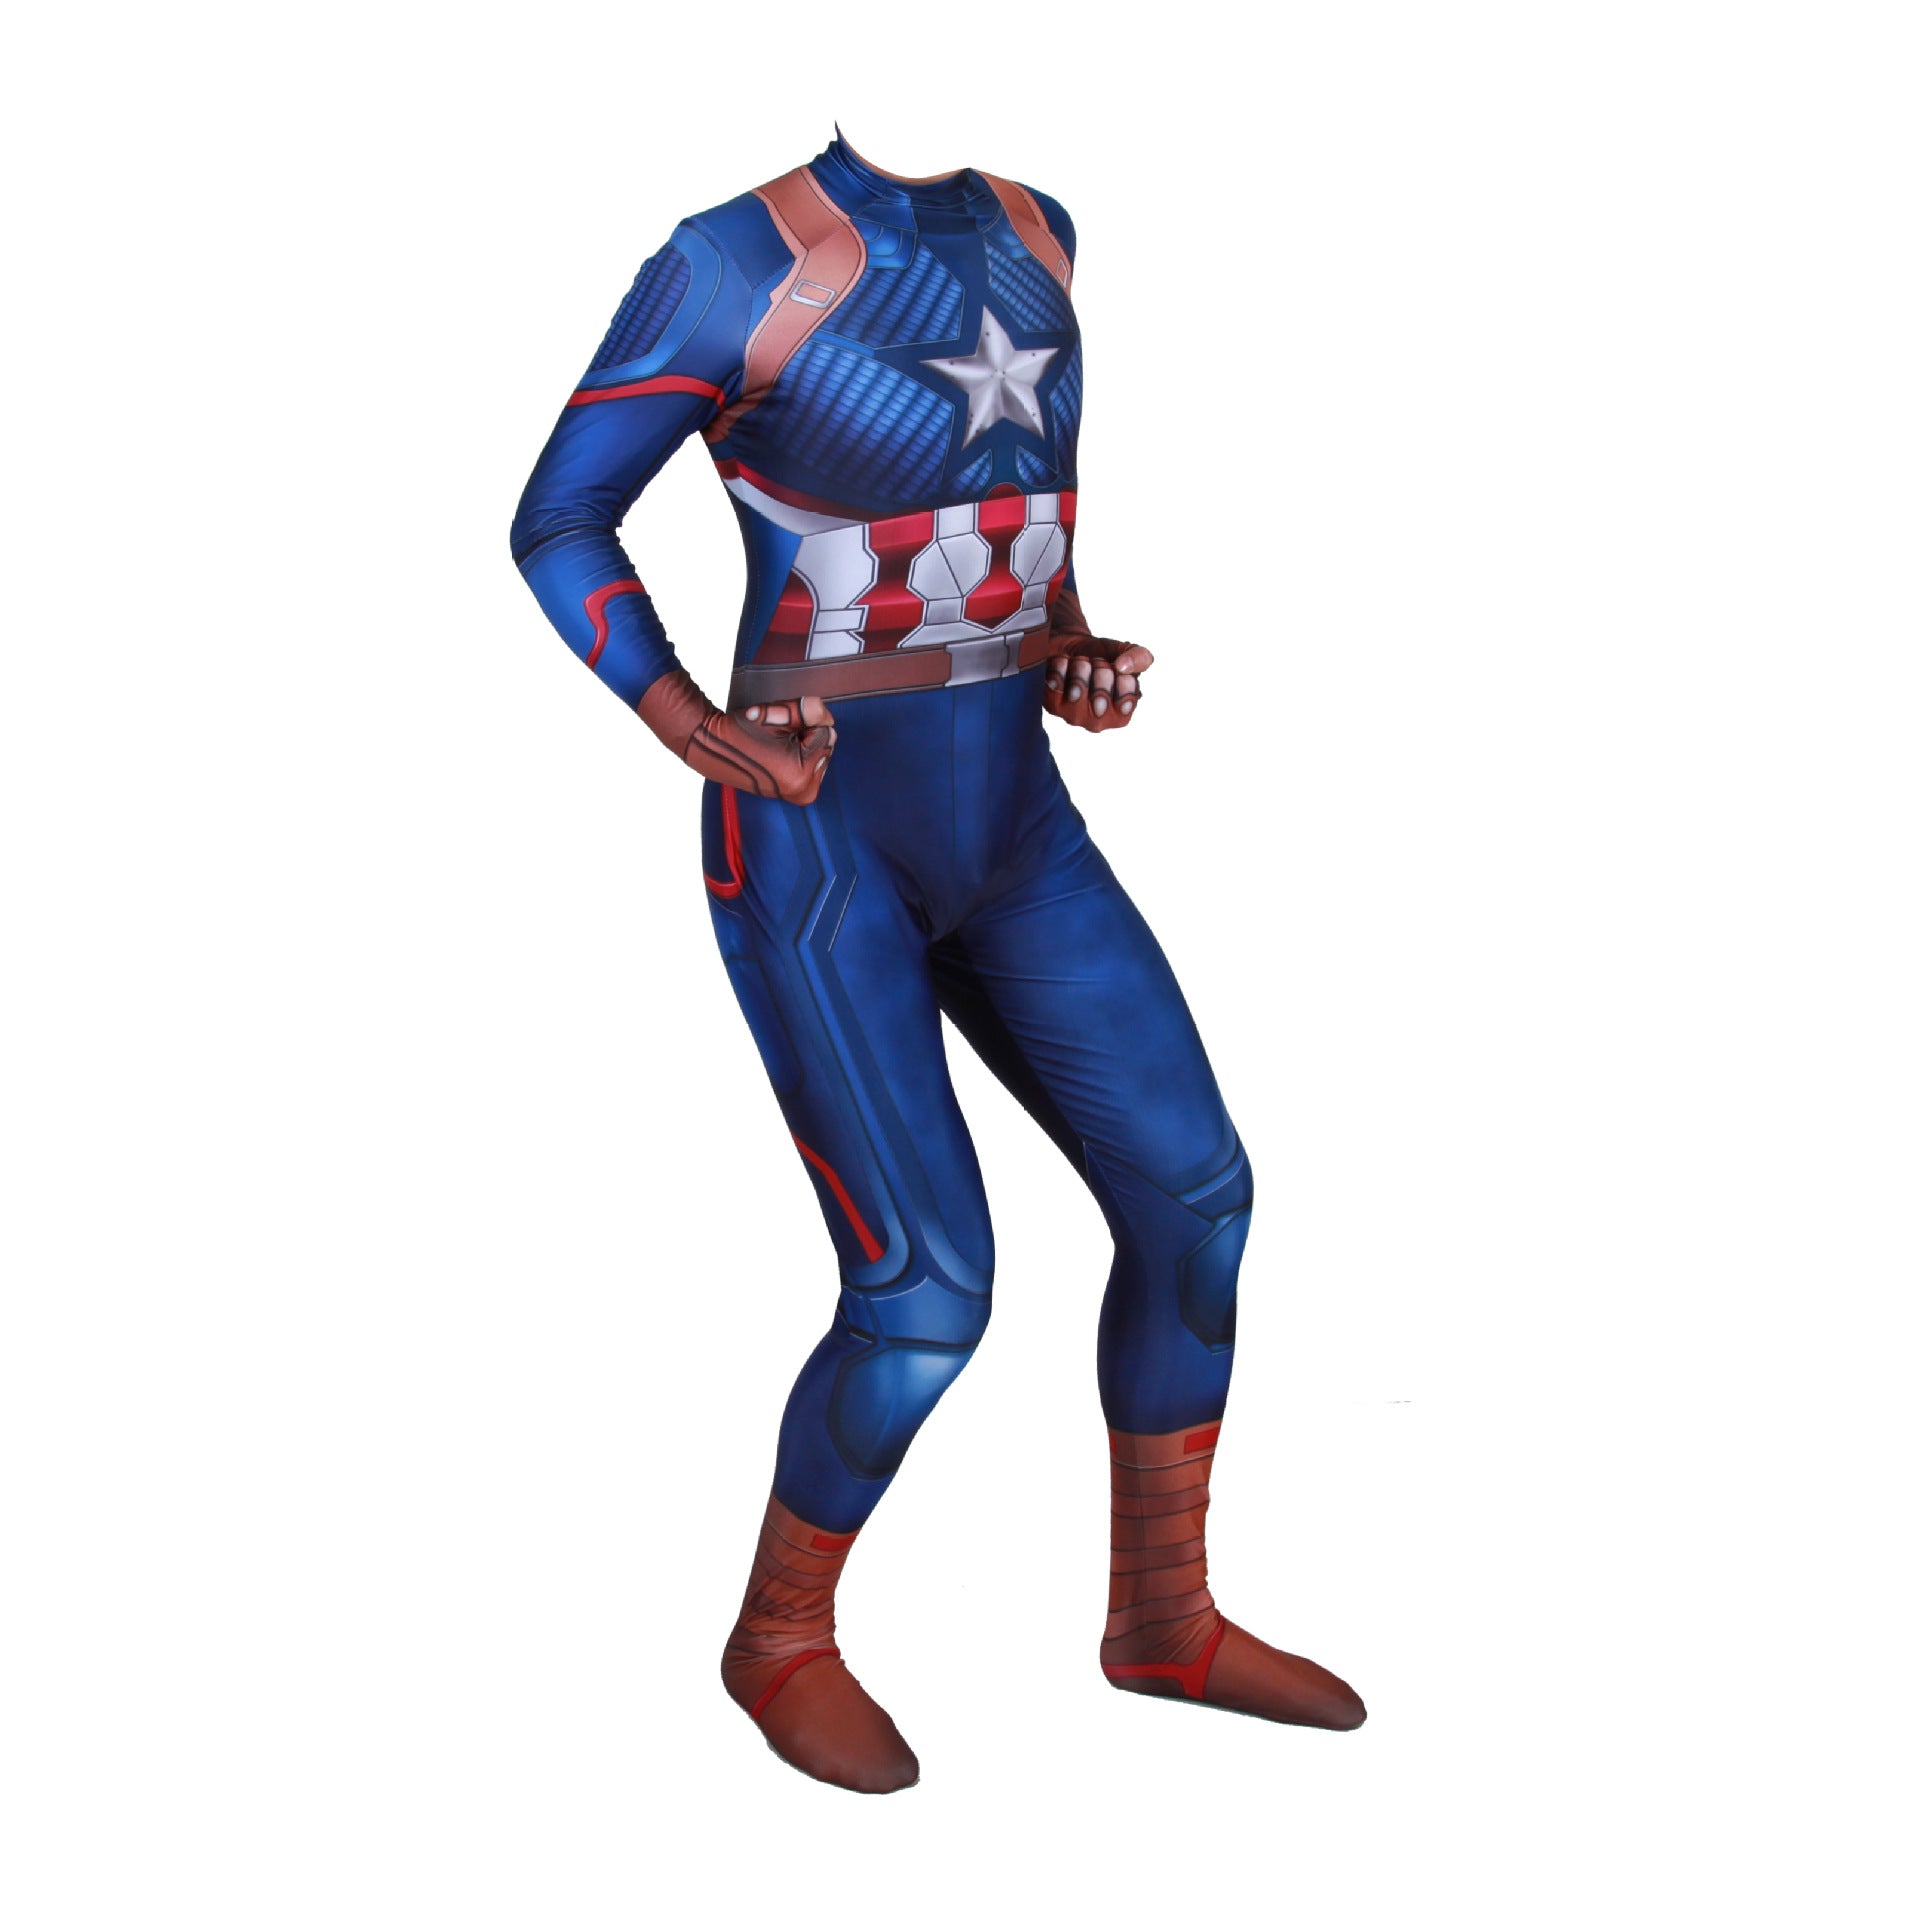 Avengers Endgame Captain America Cosplay Costume Superhero